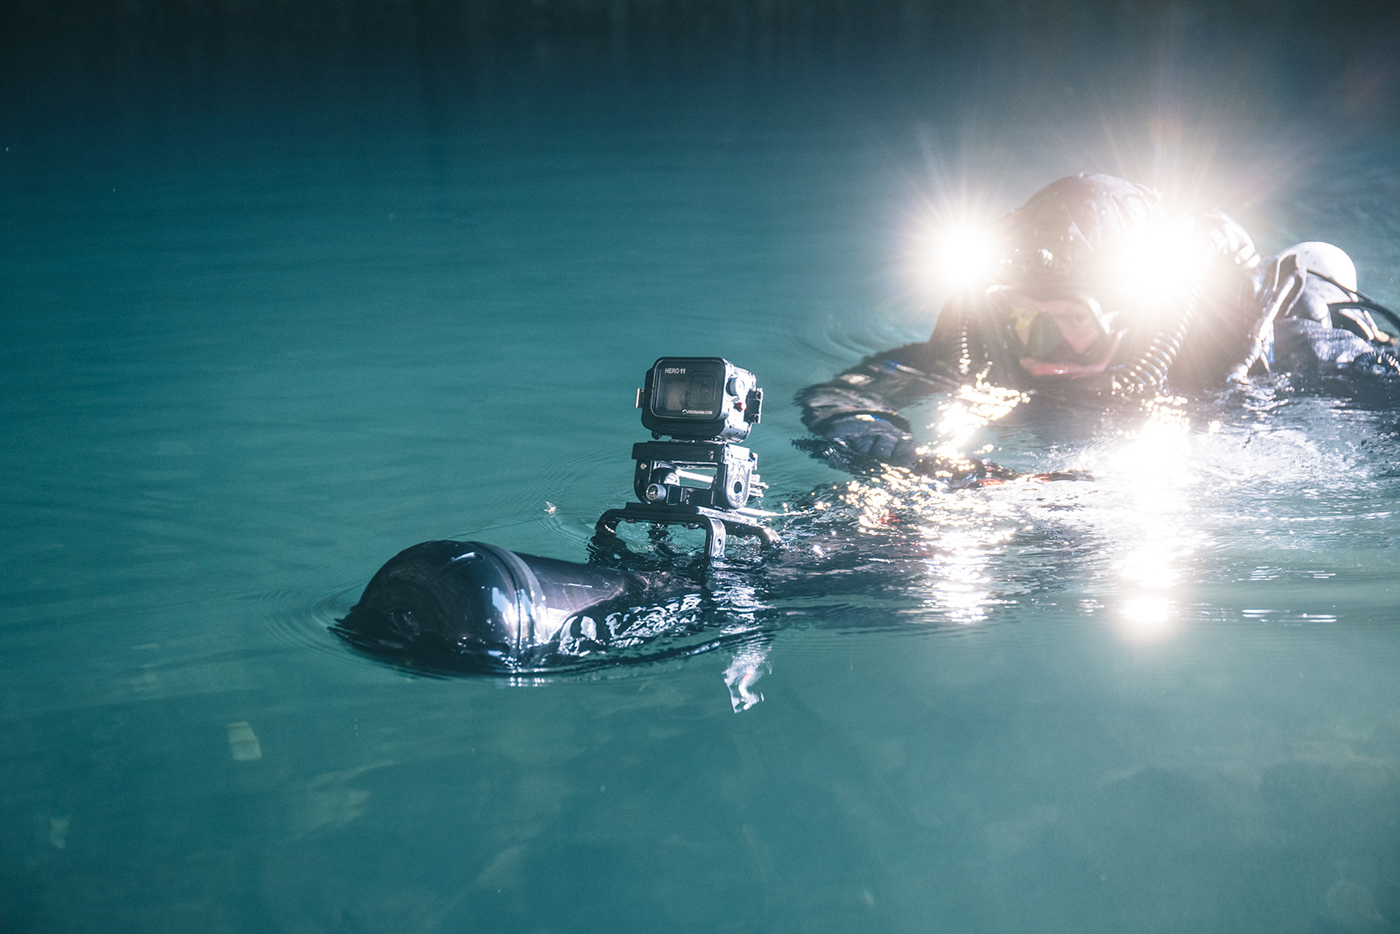 Product Photography extreme sports digitalmovie matteomescalchin lighting underwater studio cameramount diqccplighting Seacraft